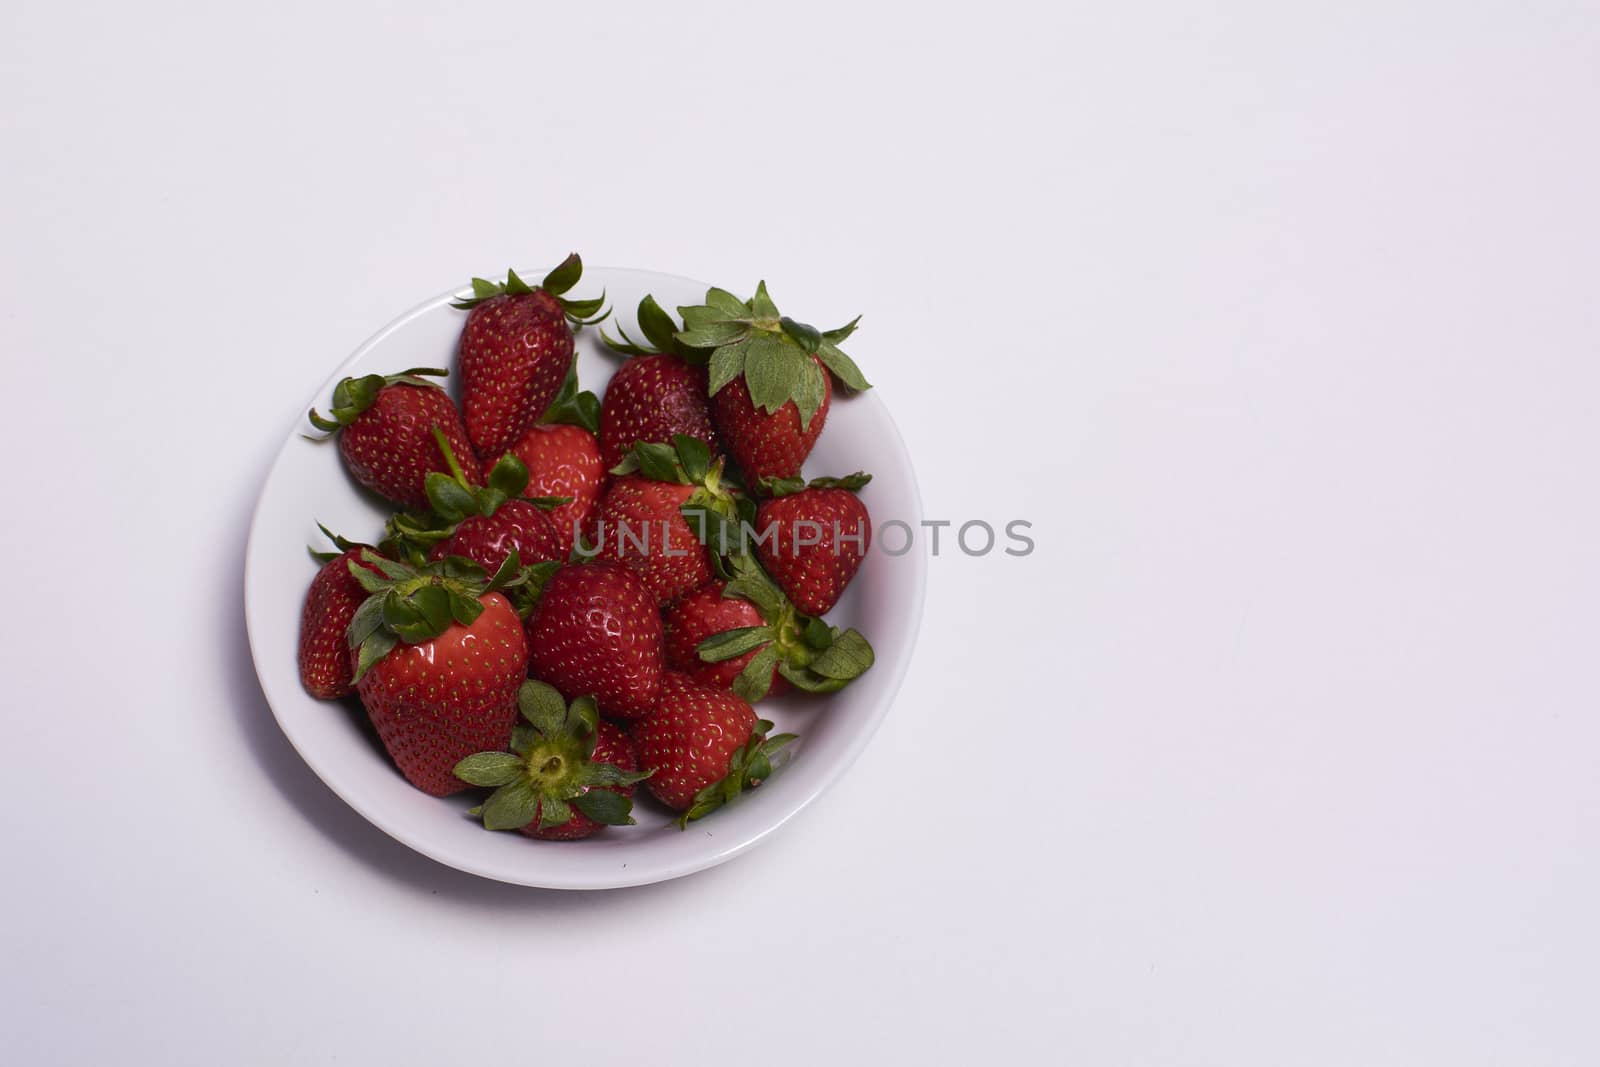 Bowl full of ripe strawberries ready to eat by raul_ruiz